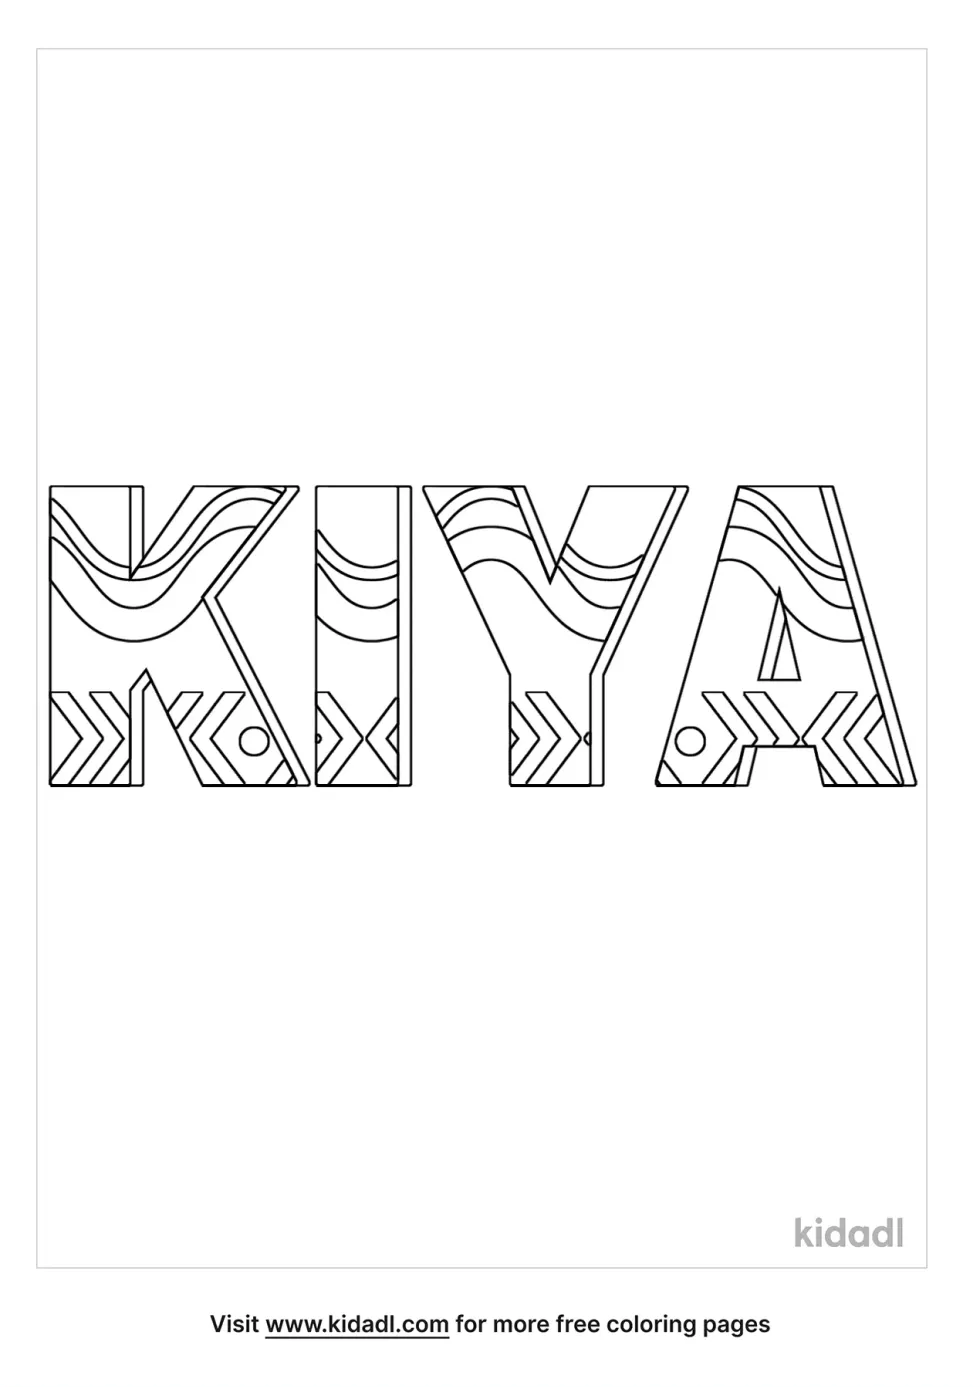 Kiya Coloring Page